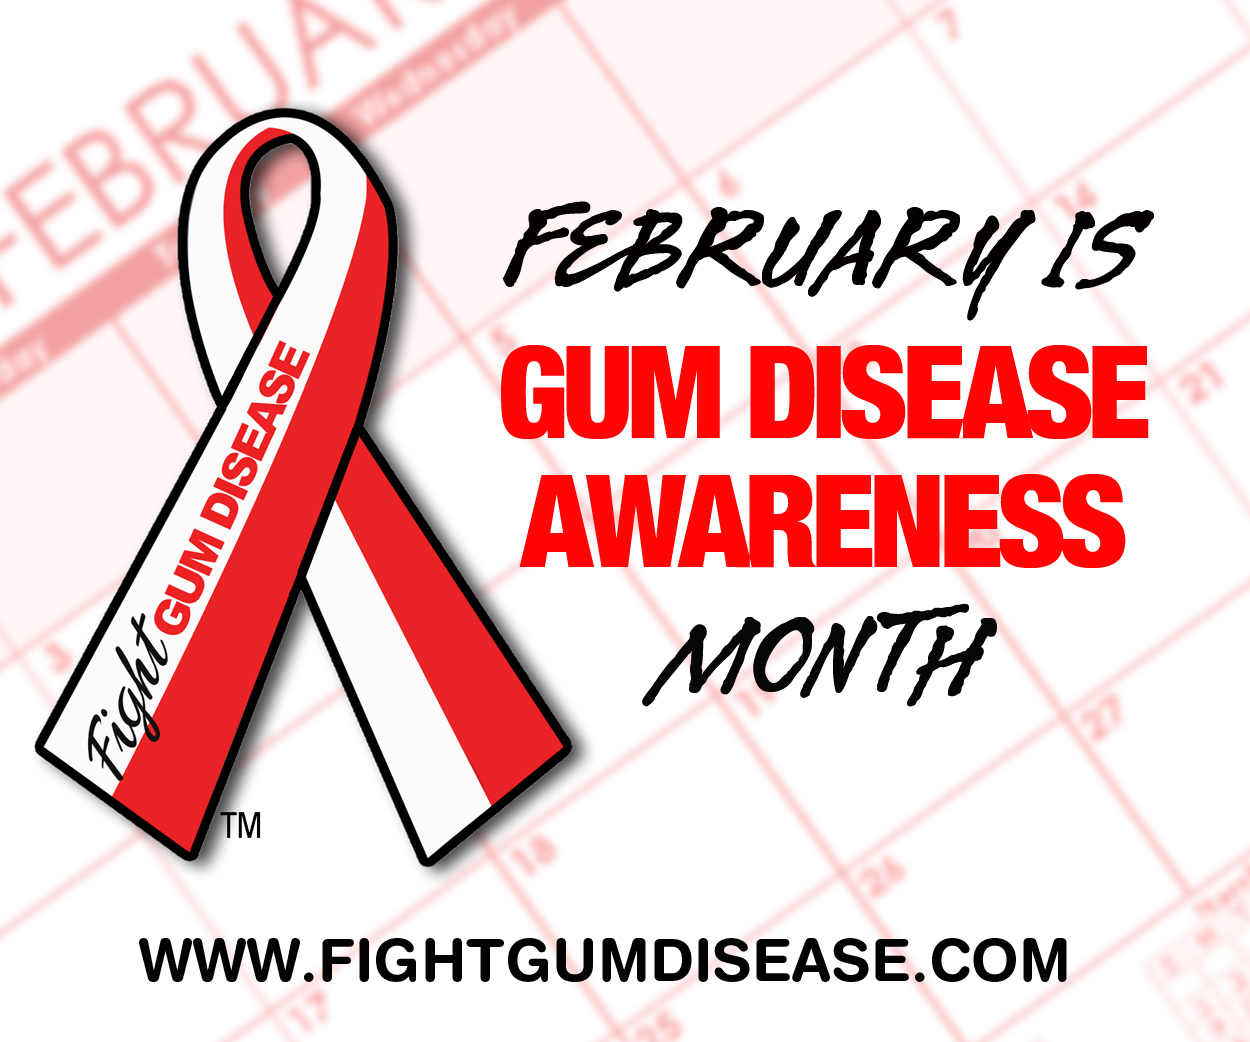 Gum Disease Awareness Month Emphasizes Dangers of the Silent Killer